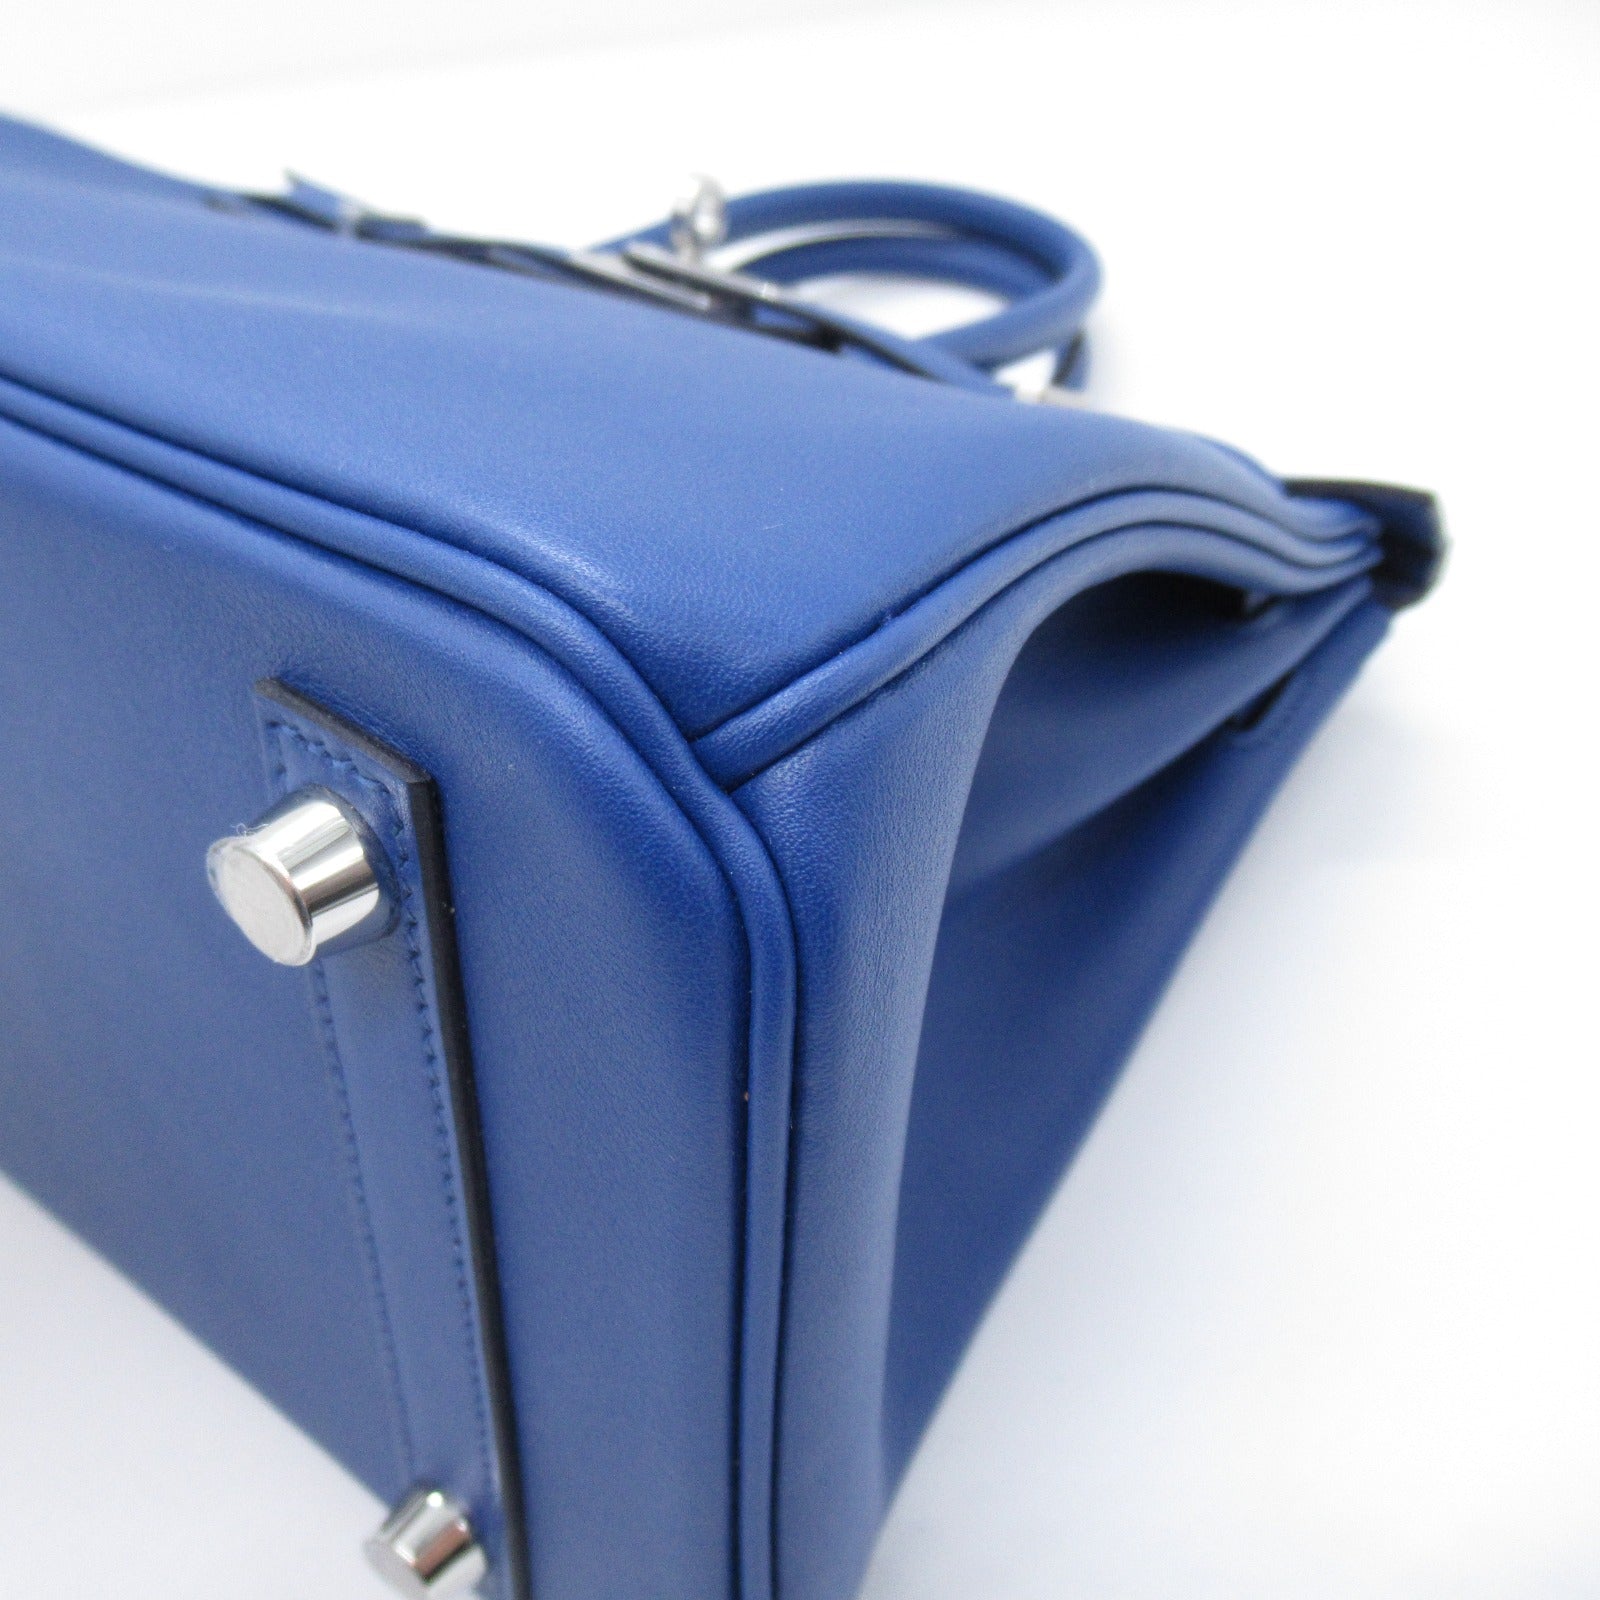 Hermes Hermes Birkin 25 Blue French Handbag Handbag Handbag Handbags Handbags Handbags